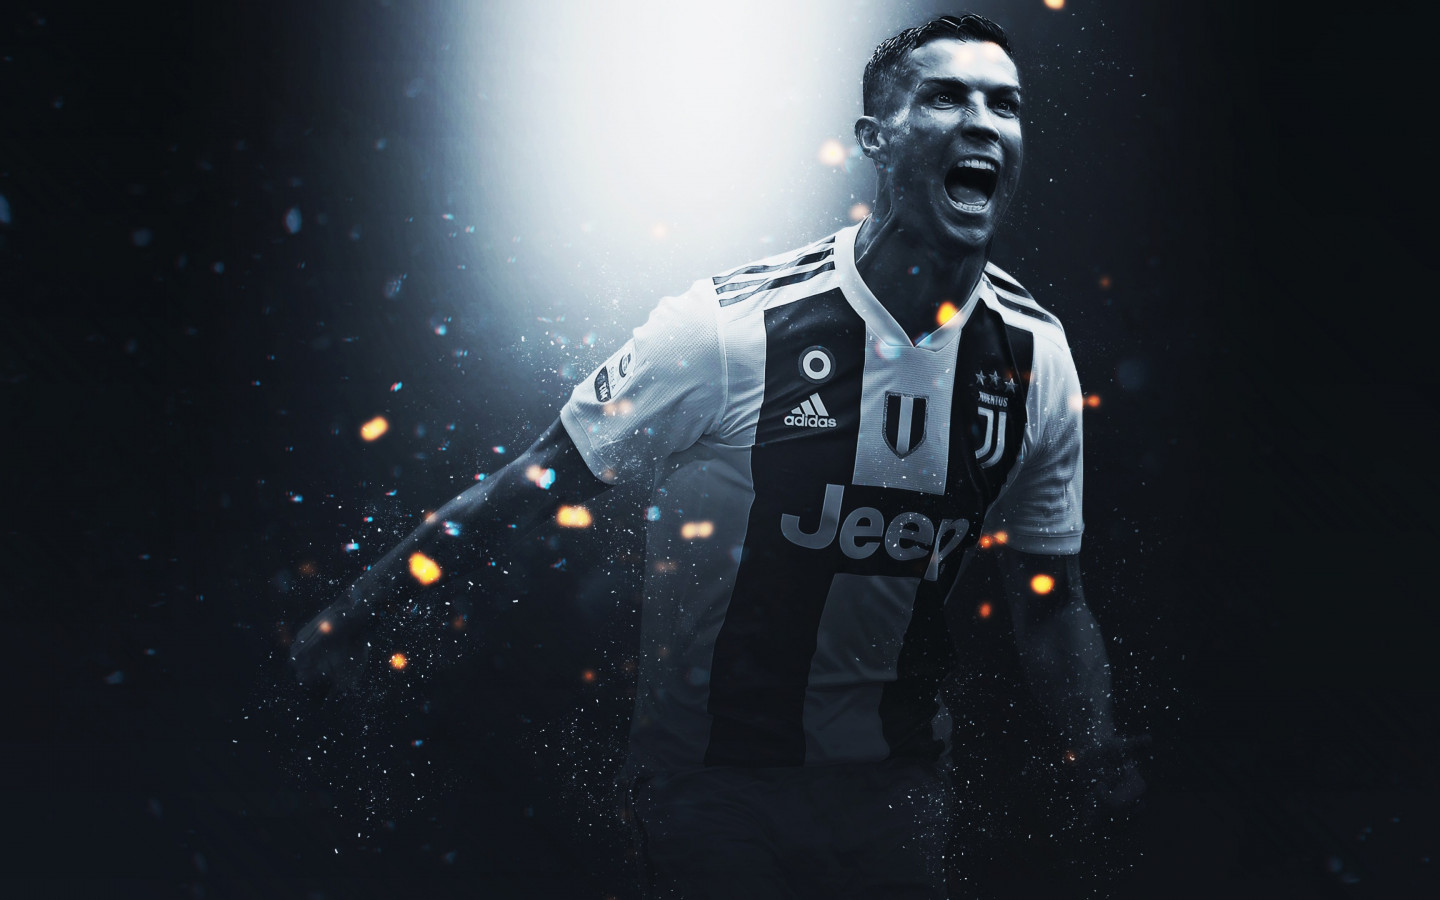 Download wallpaper: Cristiano Ronaldo at Juventus 1440x900